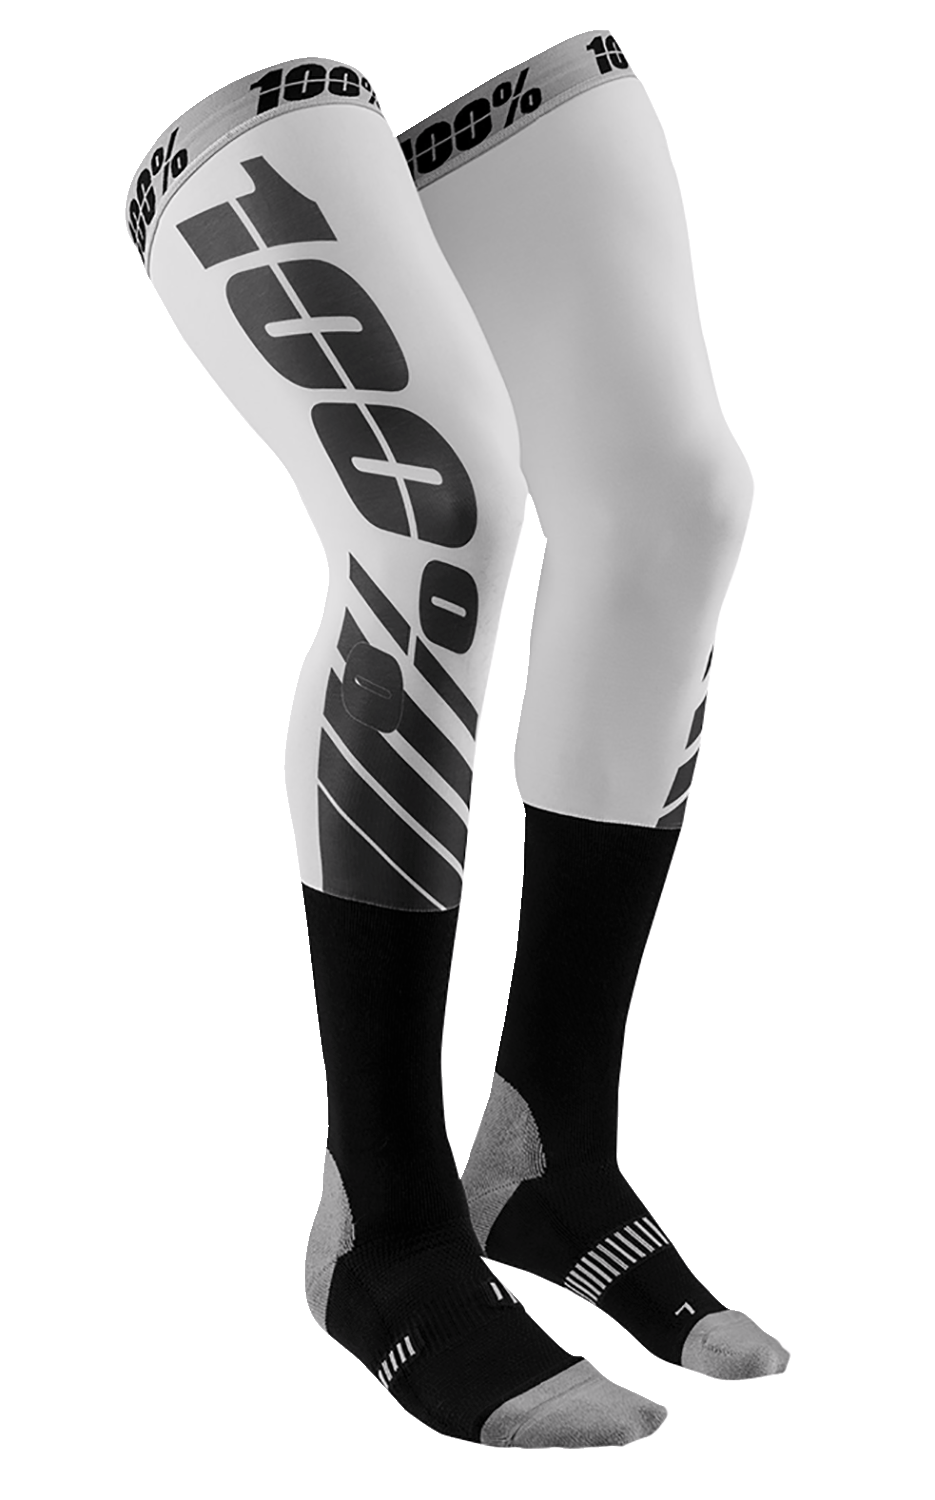 100% REV Knee Brace Performance Moto Socks - Large/XL 20052-00006